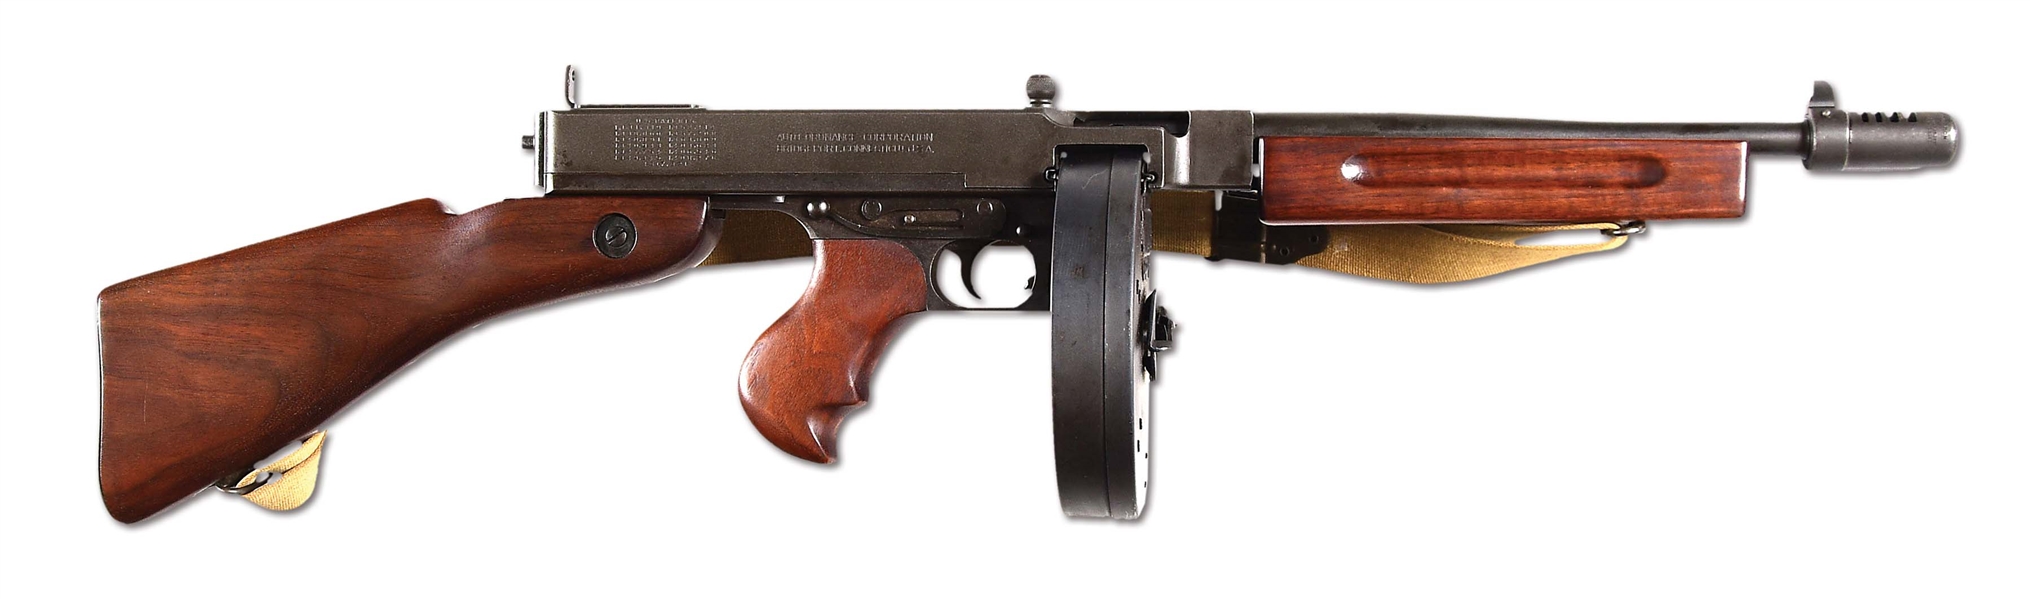 (N) EXTREMELY FINE WORLD WAR II ERA AUTO ORDNANCE 1928A1 THOMPSON MACHINE GUN (CURIO AND RELIC).